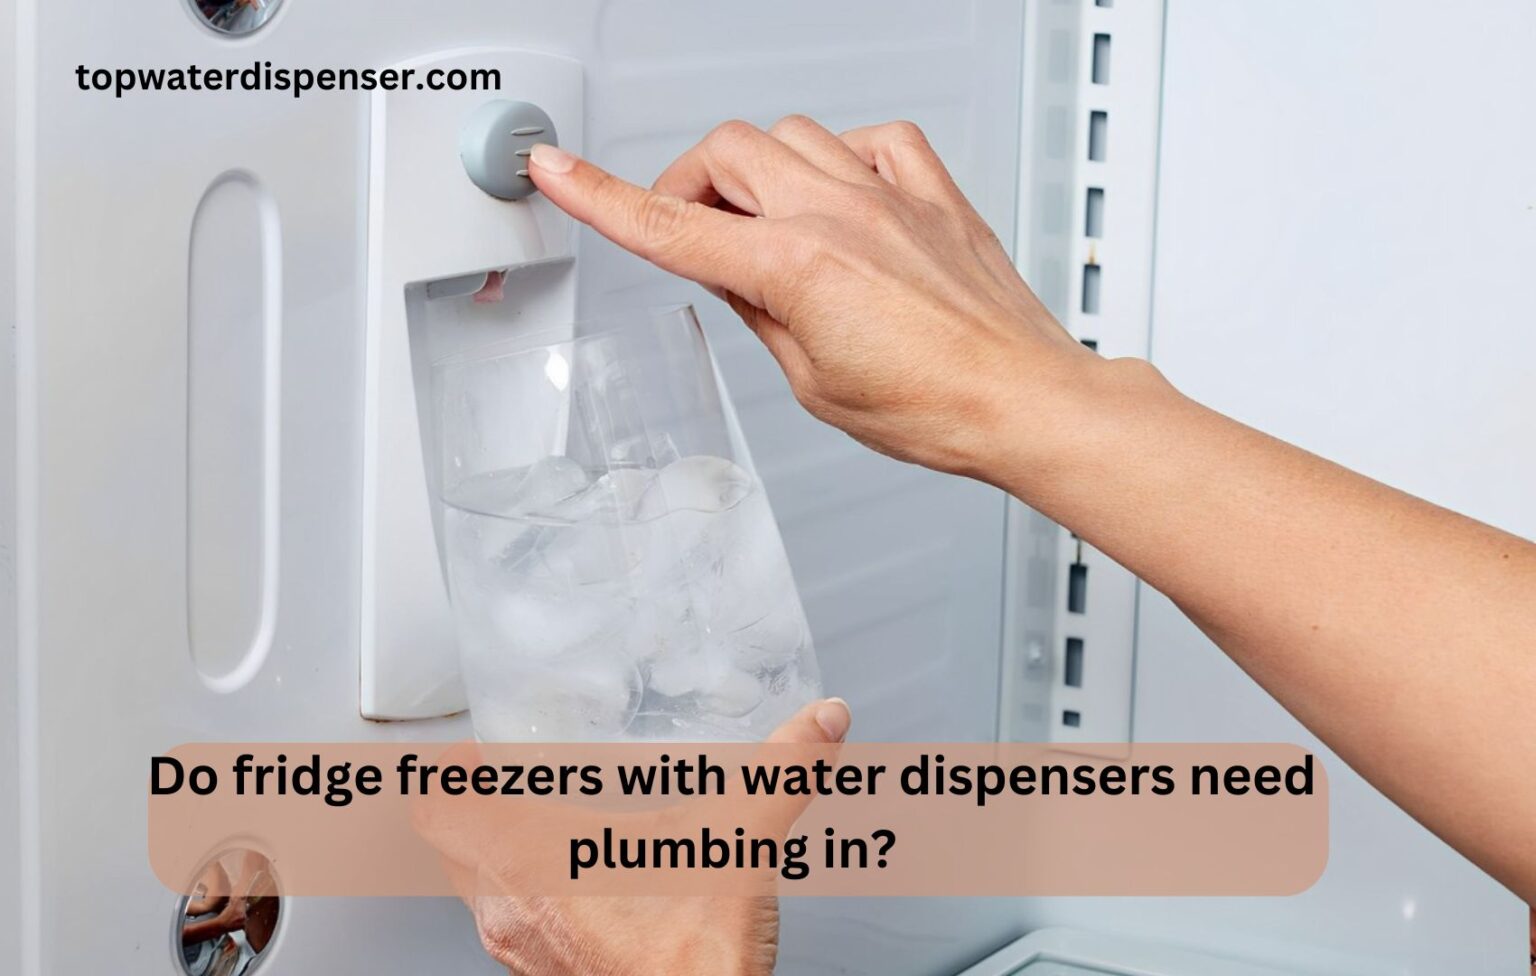 Do fridge freezers with water dispensers need plumbing in?